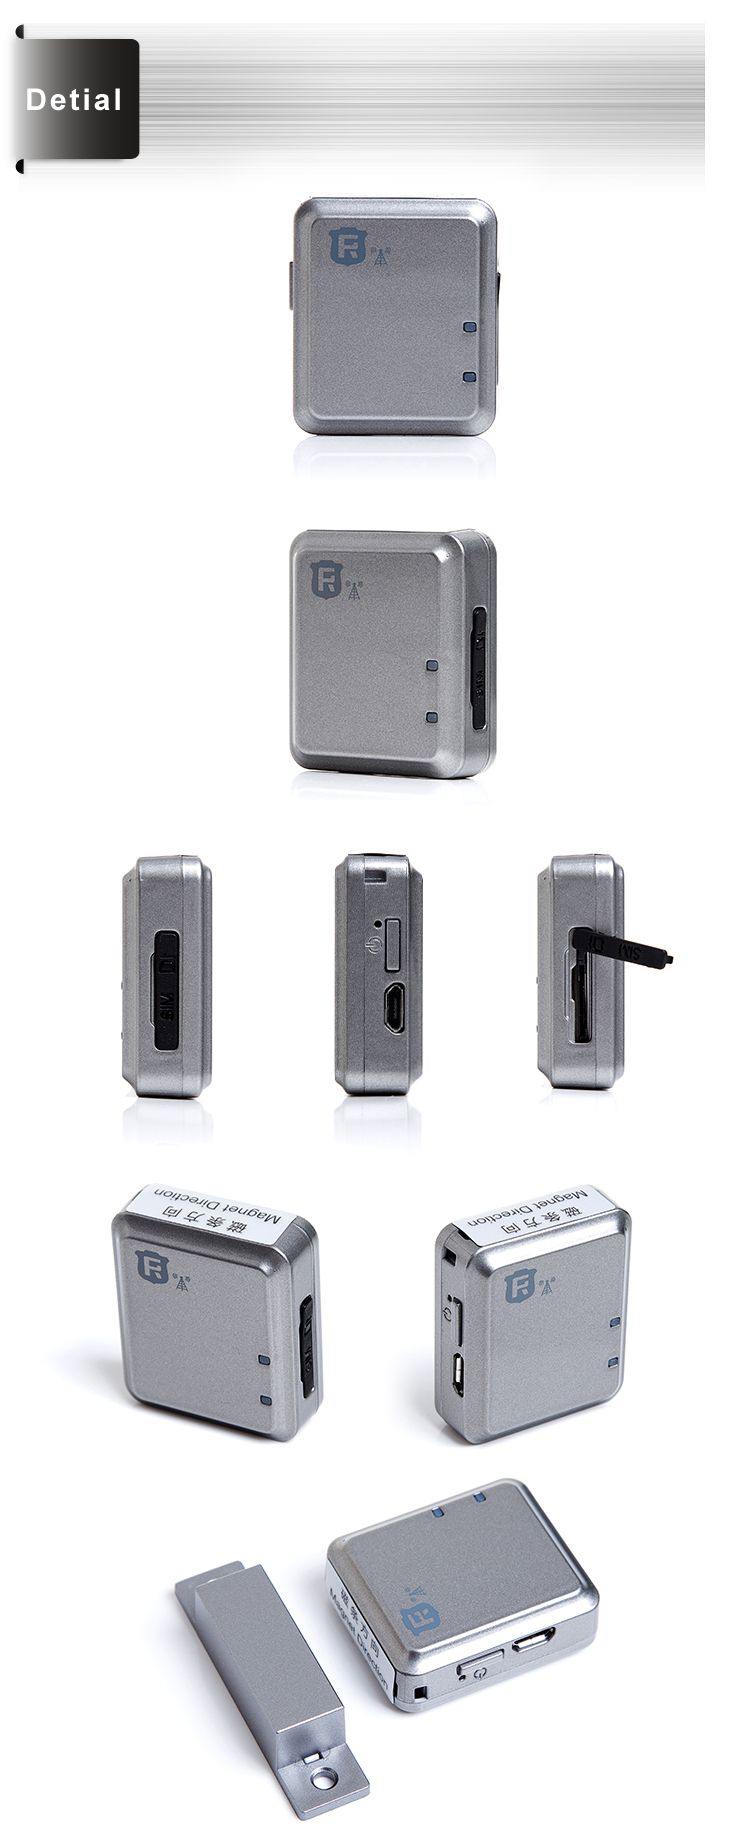 Reachfar rf-v13 cheap mini gsm magnetic wireless refrigerator door sensor alarm tracker